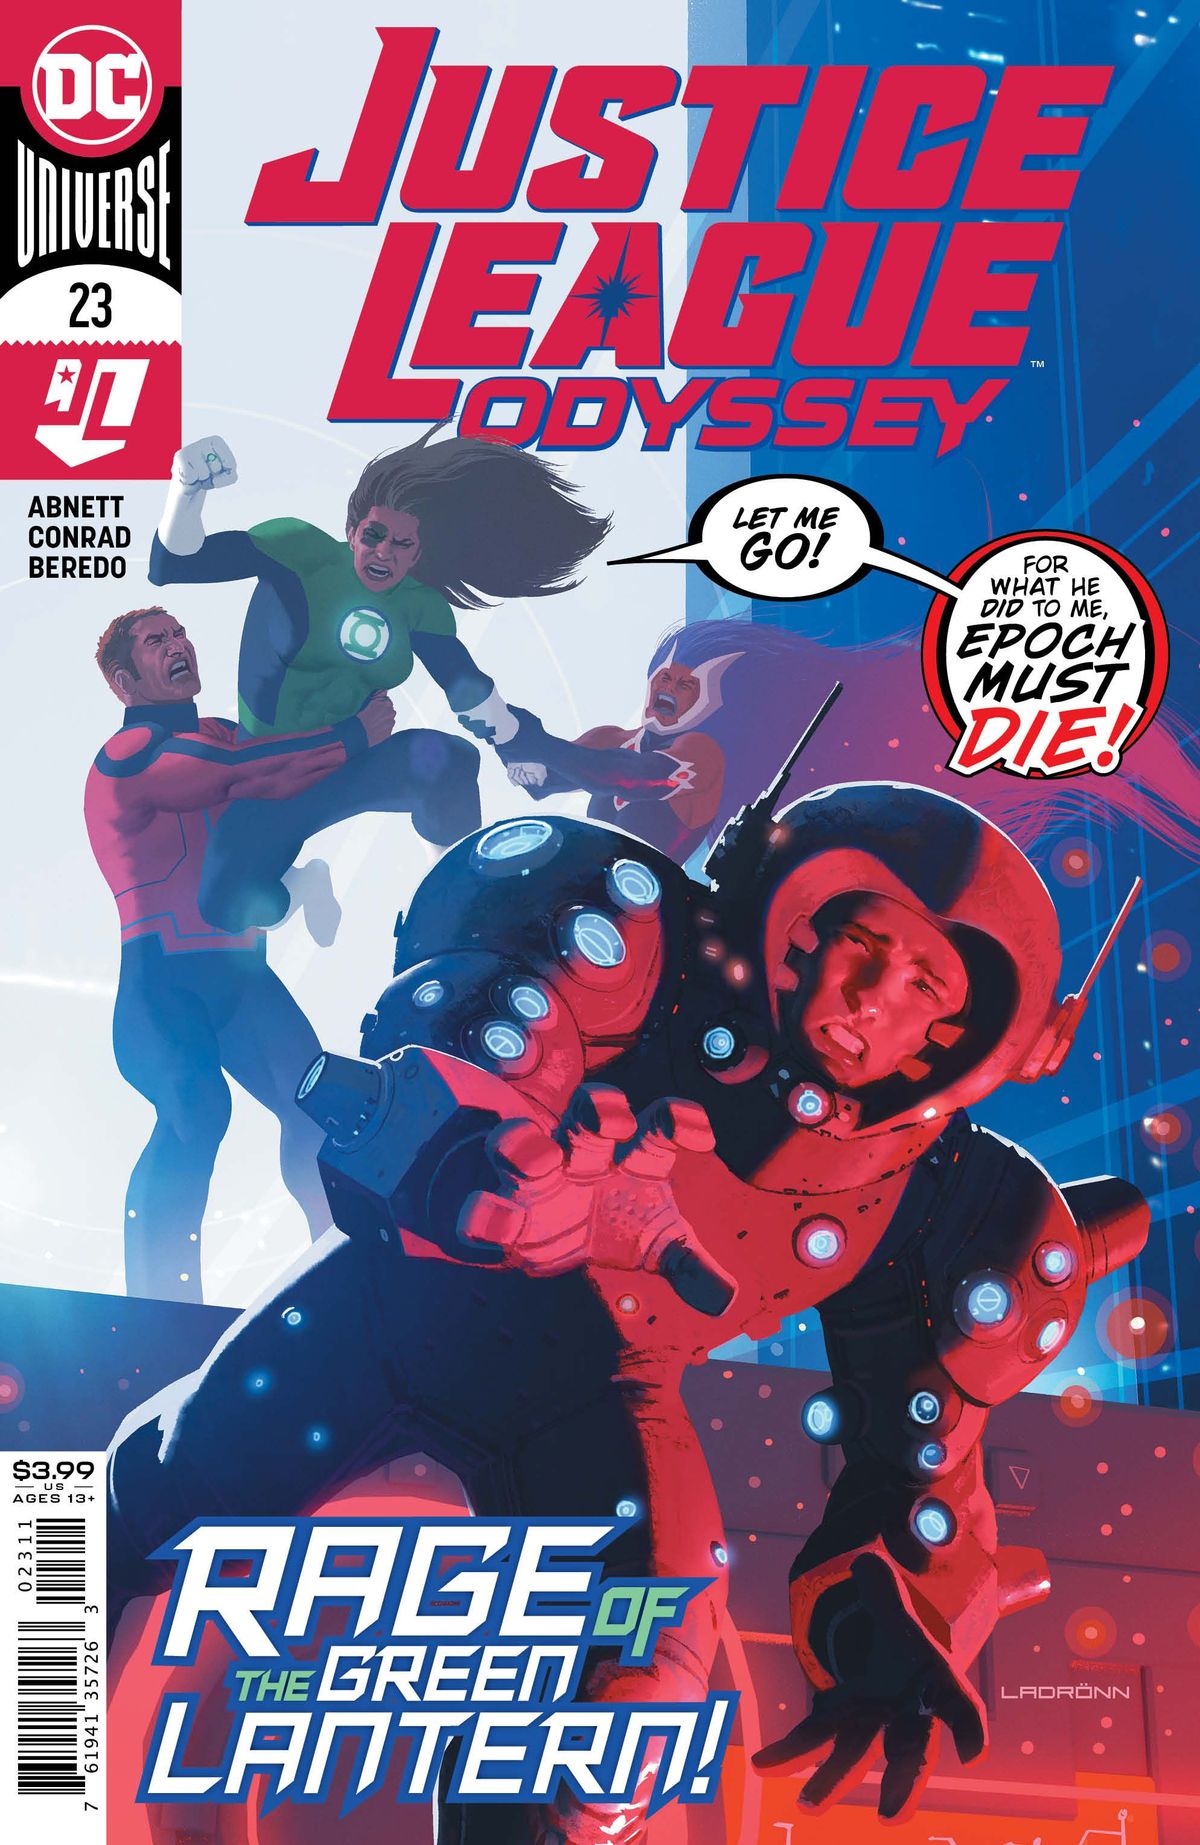 FÖRSIKT: Justice League Odyssey # 23